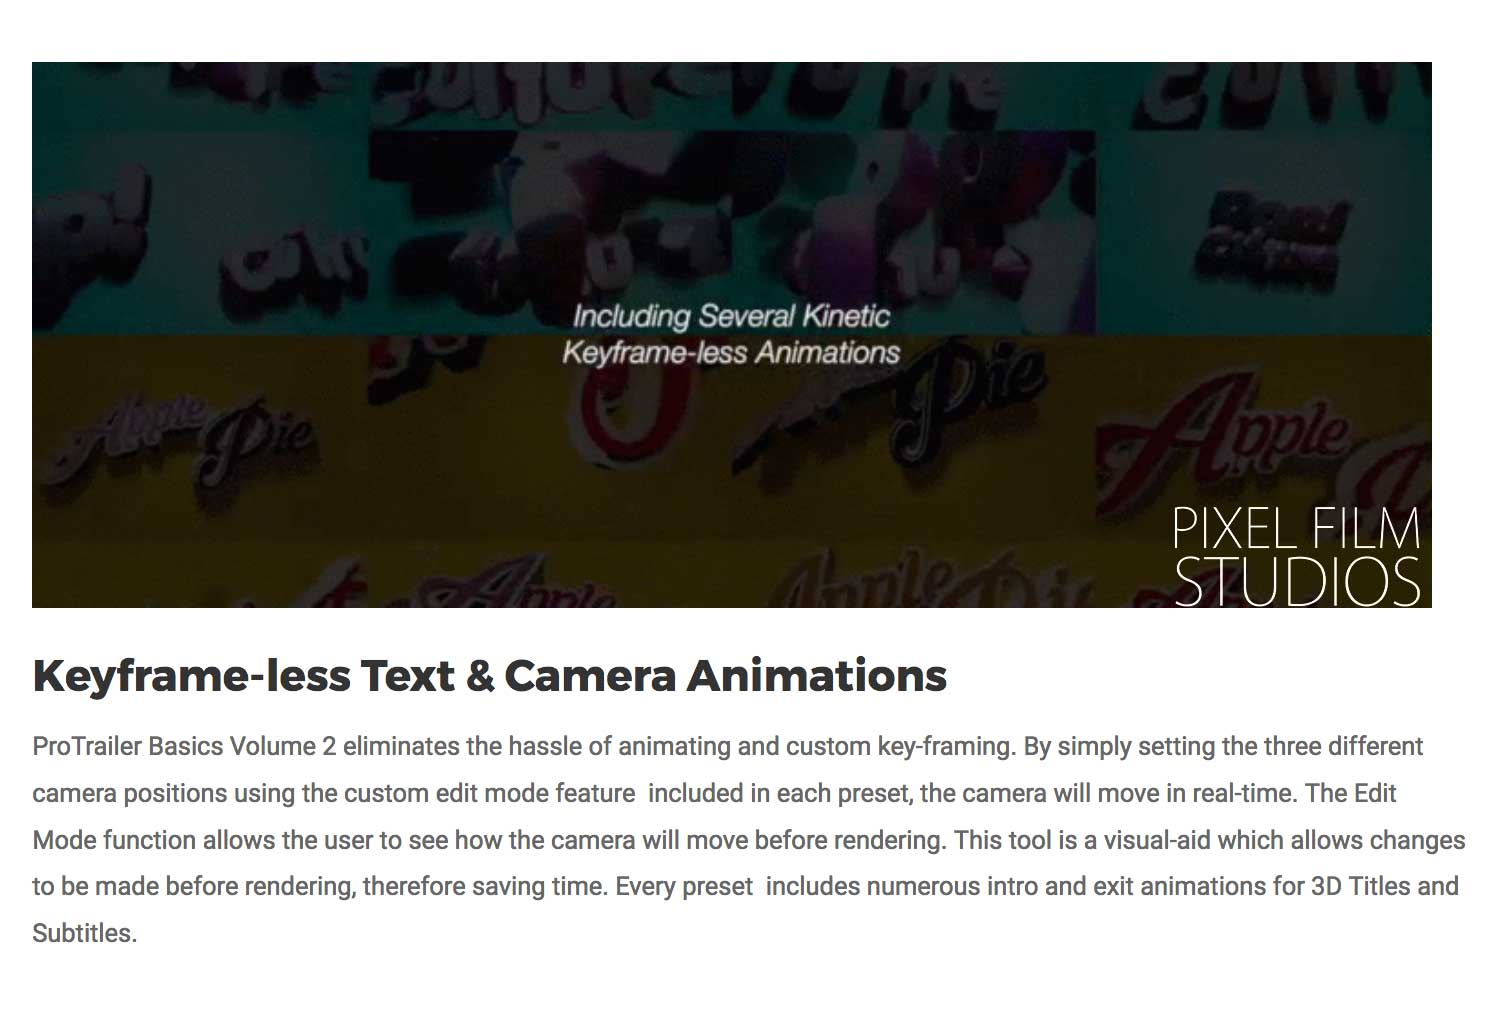 ProTrailer Basics Volume 2 - FCPX Plugins - Pixel Film Studios